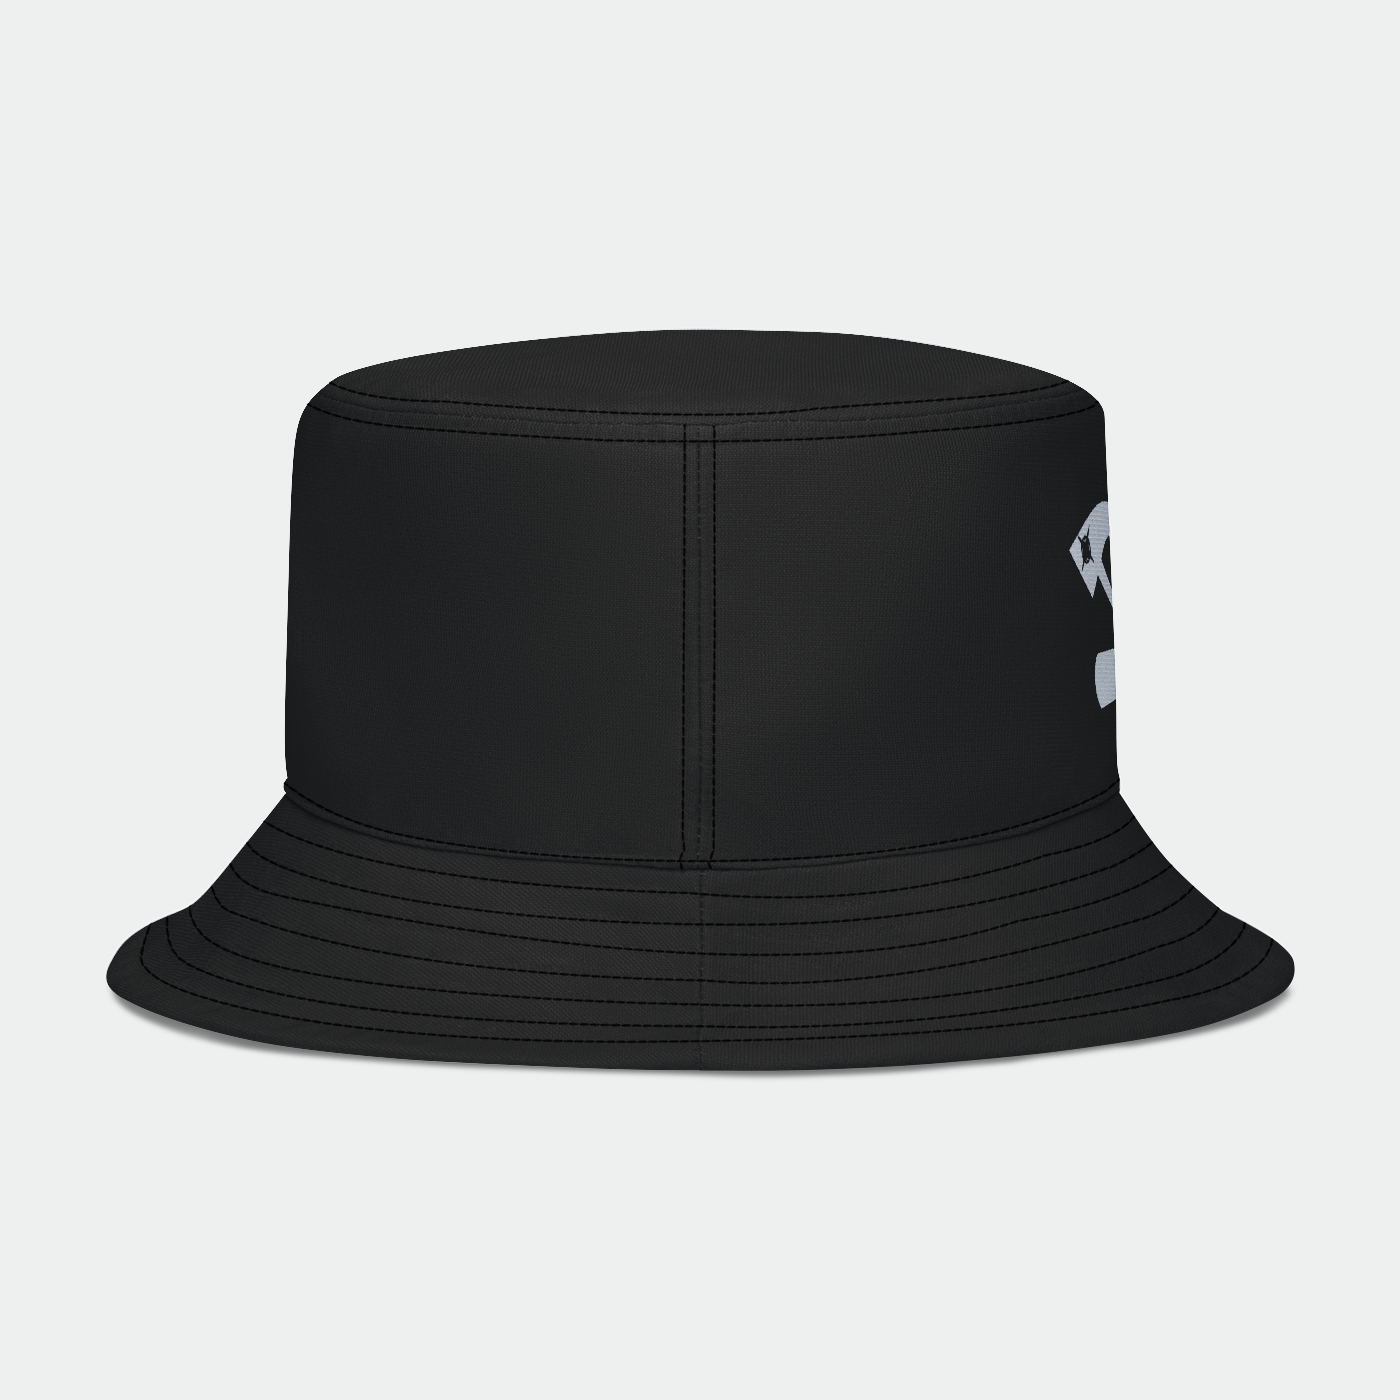 Derrty Ent Black Bucket Hat